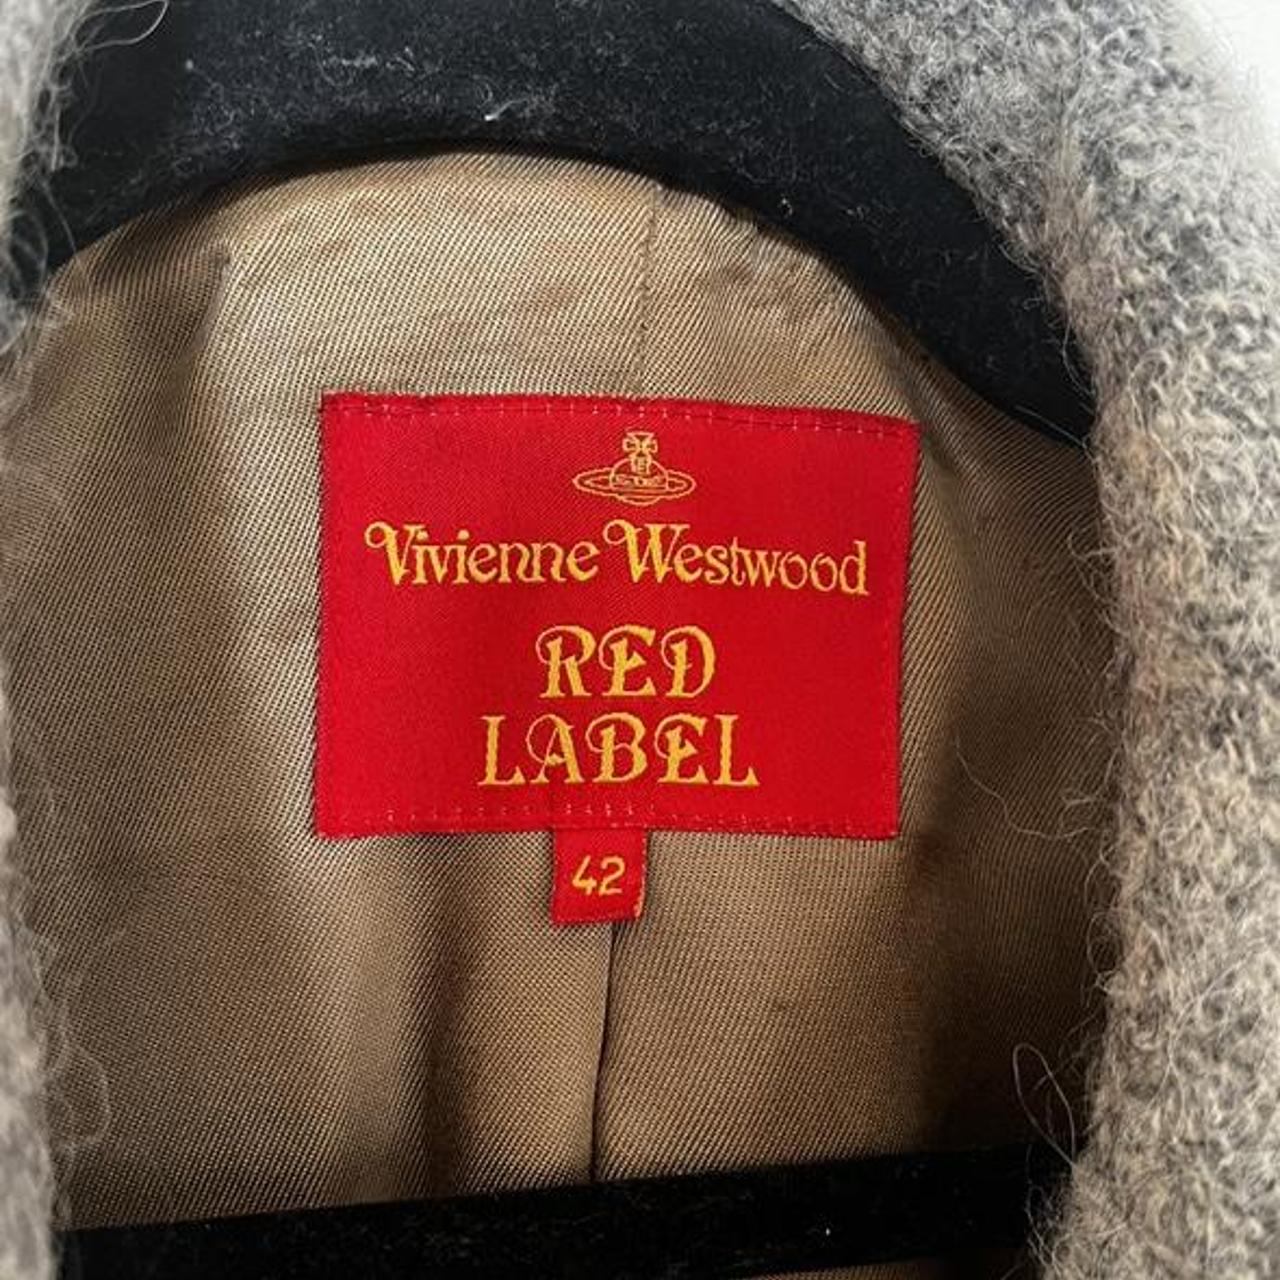 Vivienne Westwood Red Label Wool Coat. Double... - Depop